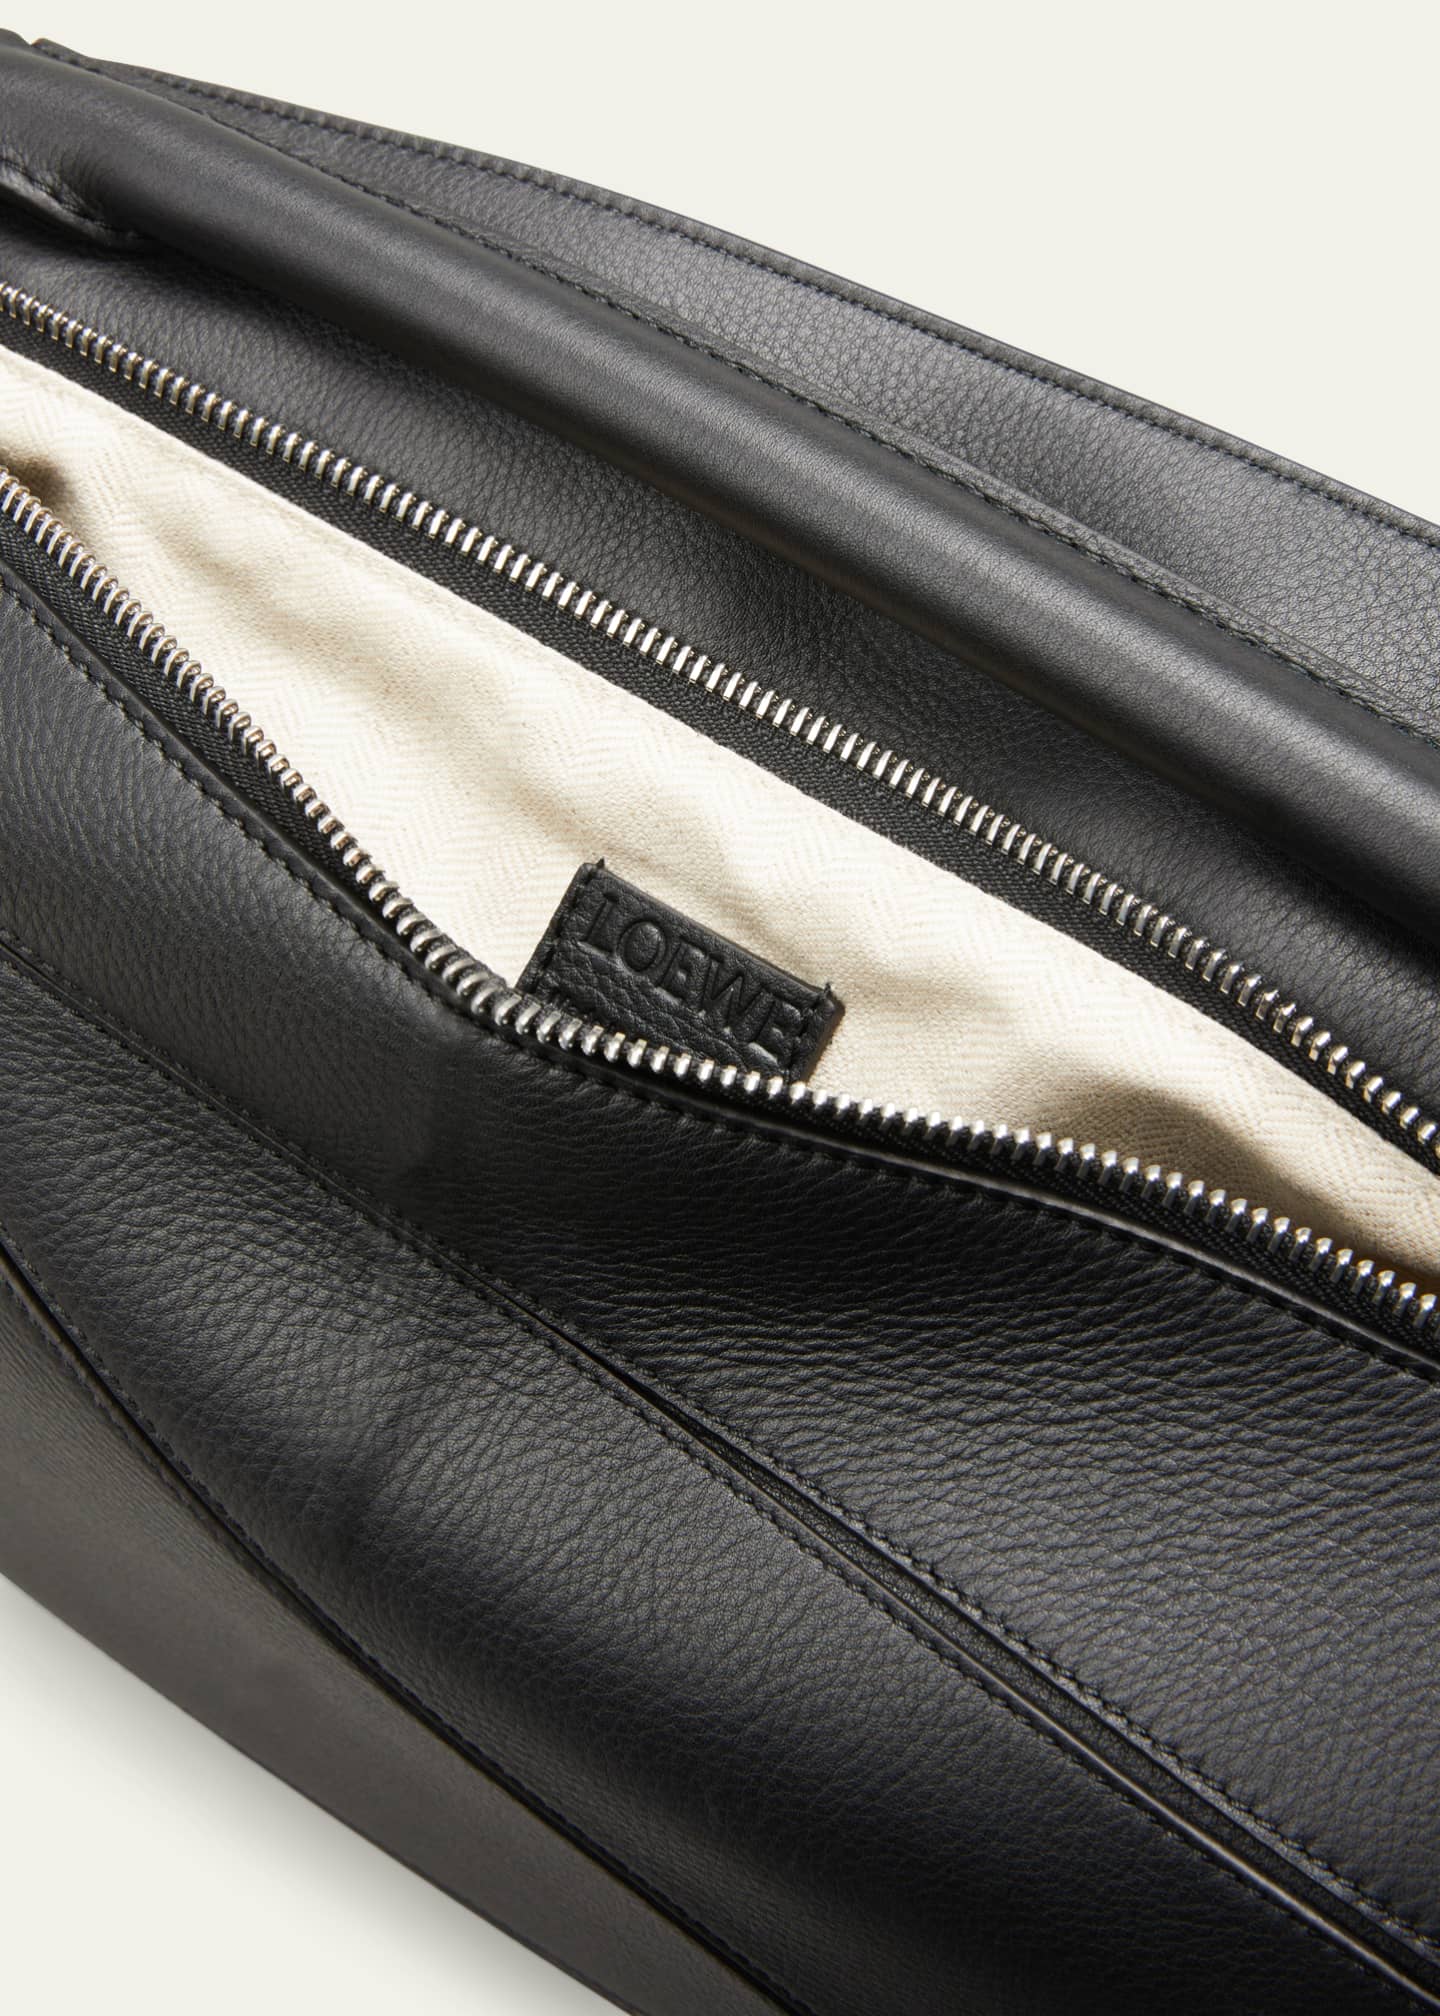 Loewe Women's Luxury Mini Puzzle Bag in Classic Calfskin for - Black - Shoulder Bags